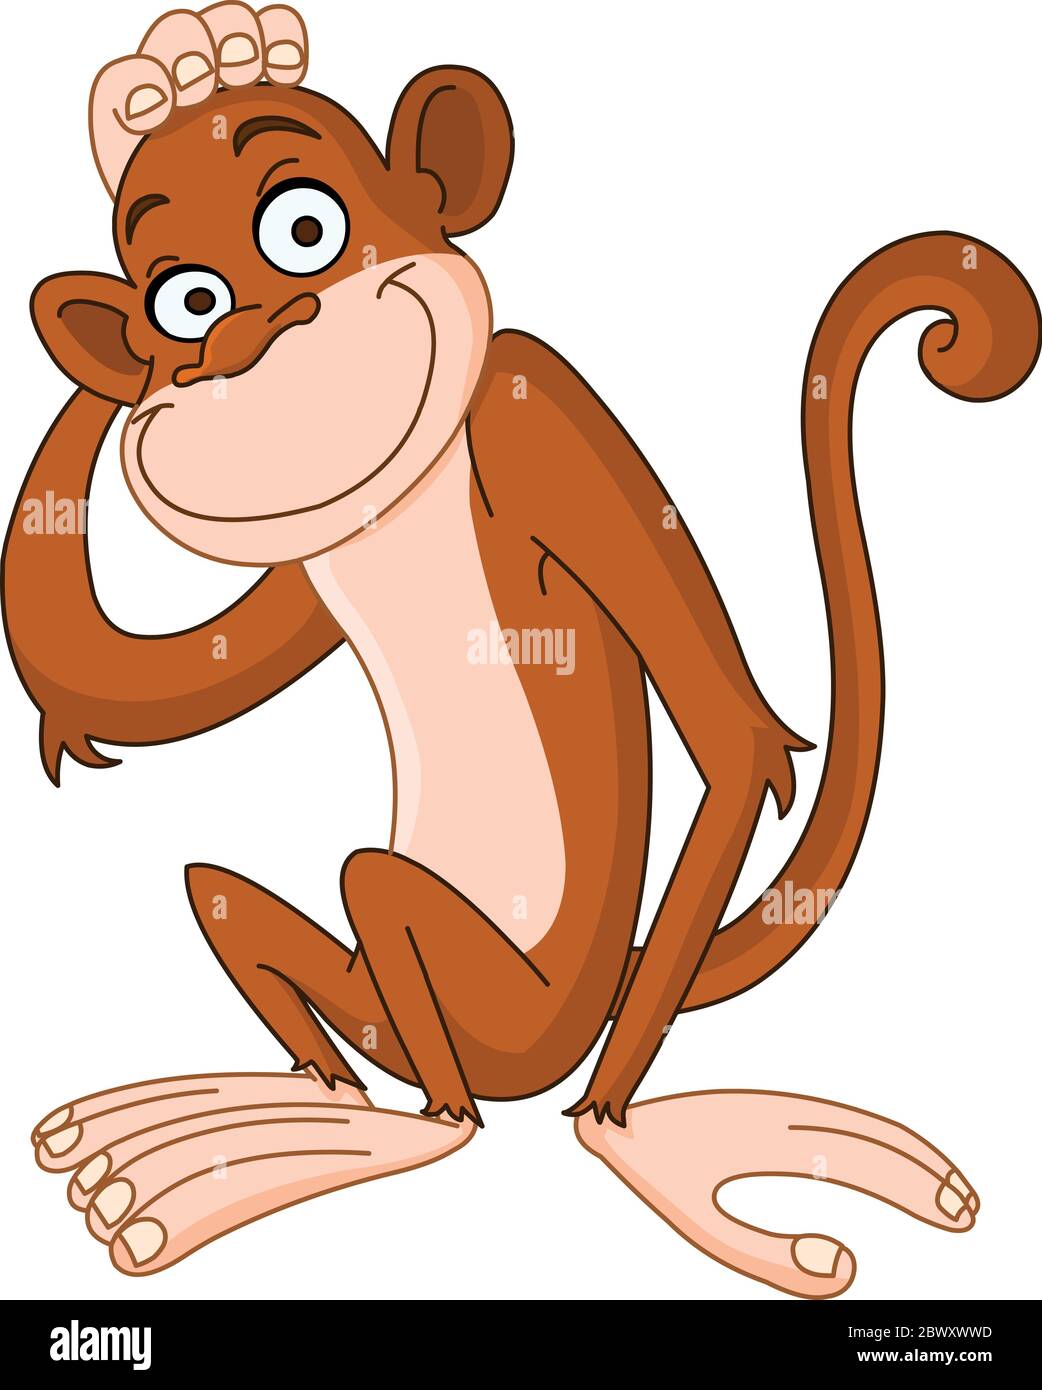 Smiley monkey scratching his head Stock Vector